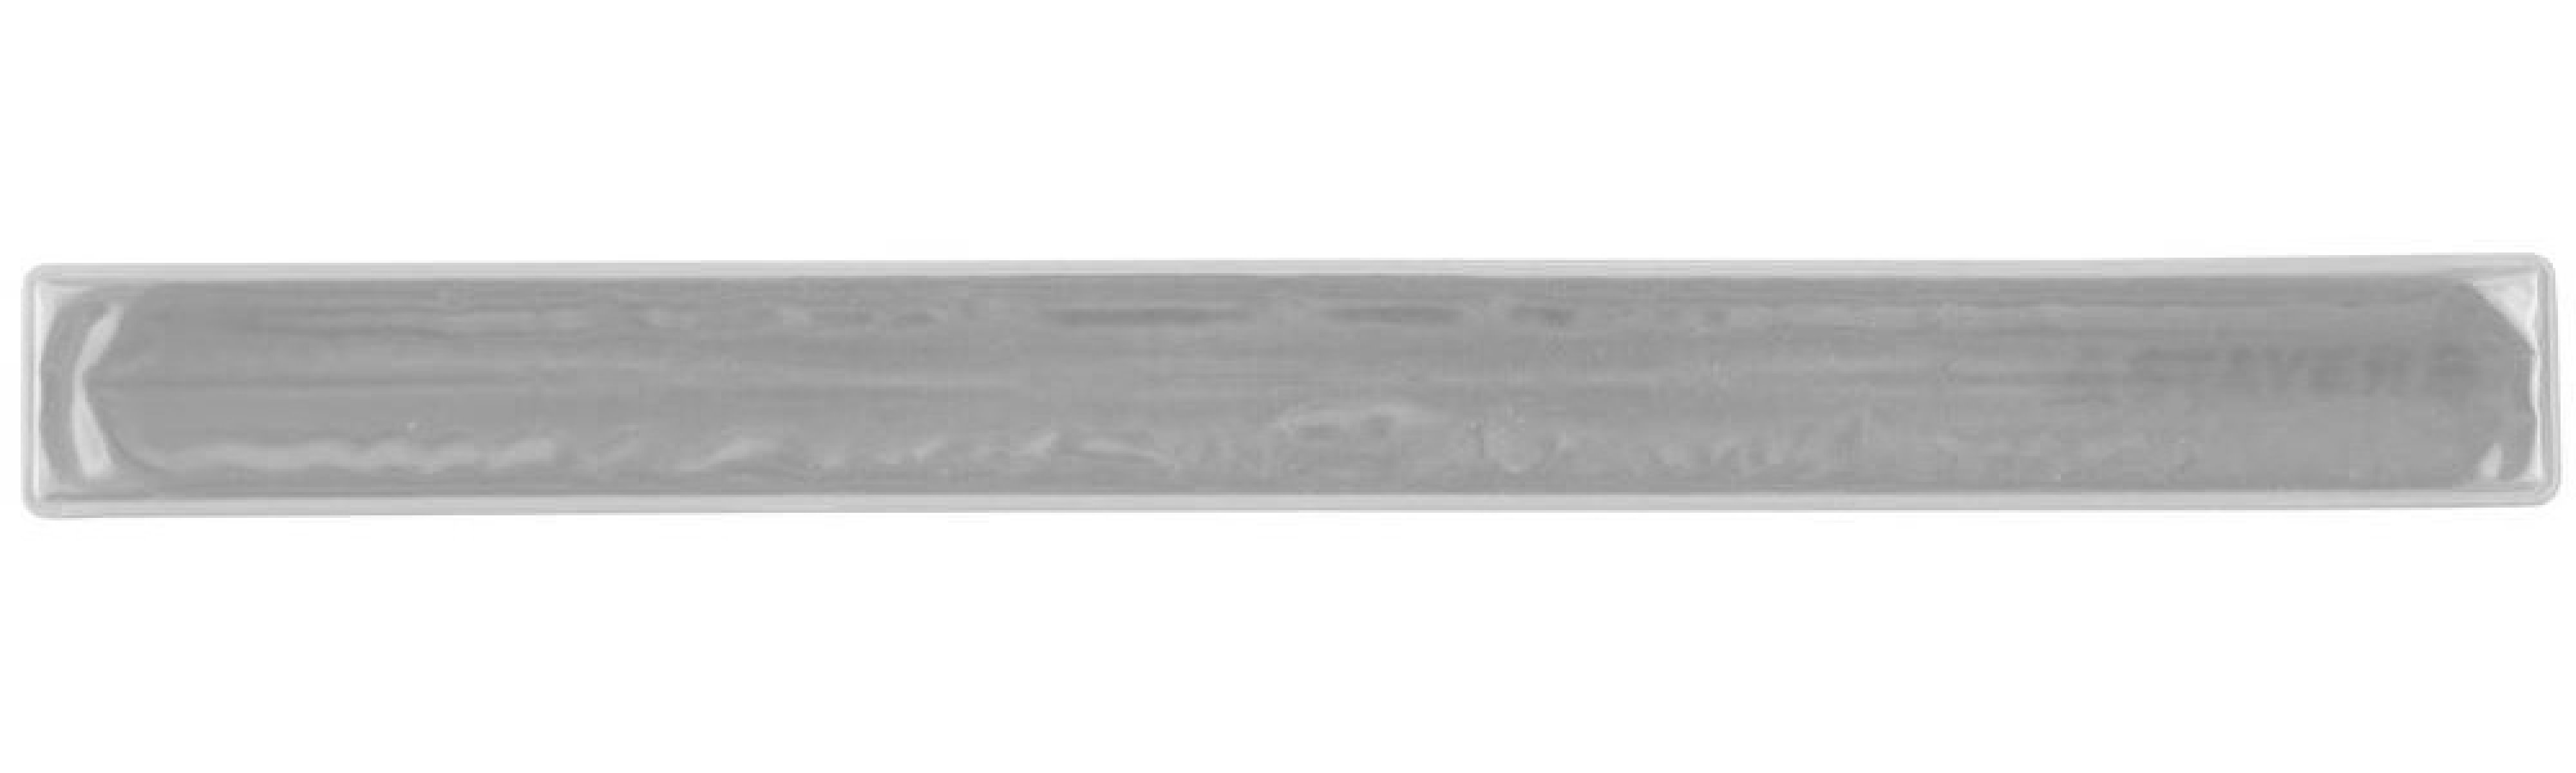 Светоотражающий браслет STAYER самофиксирующийся серый (11630-G)